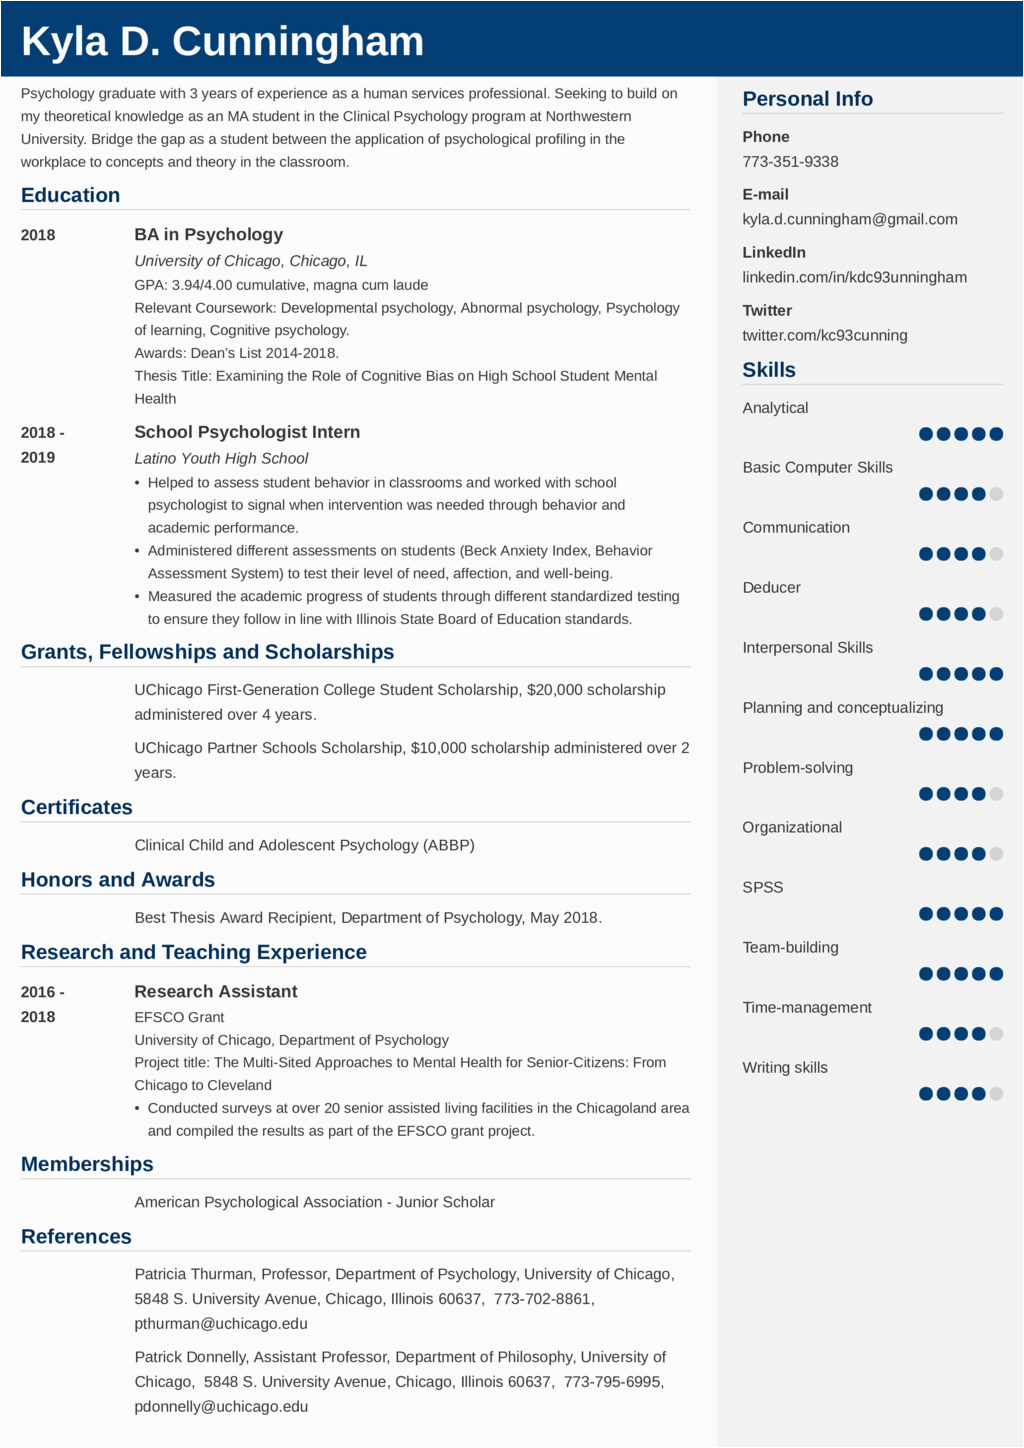 Sample Resume for Graduate School Education Resume for Graduate School Application Examples Template